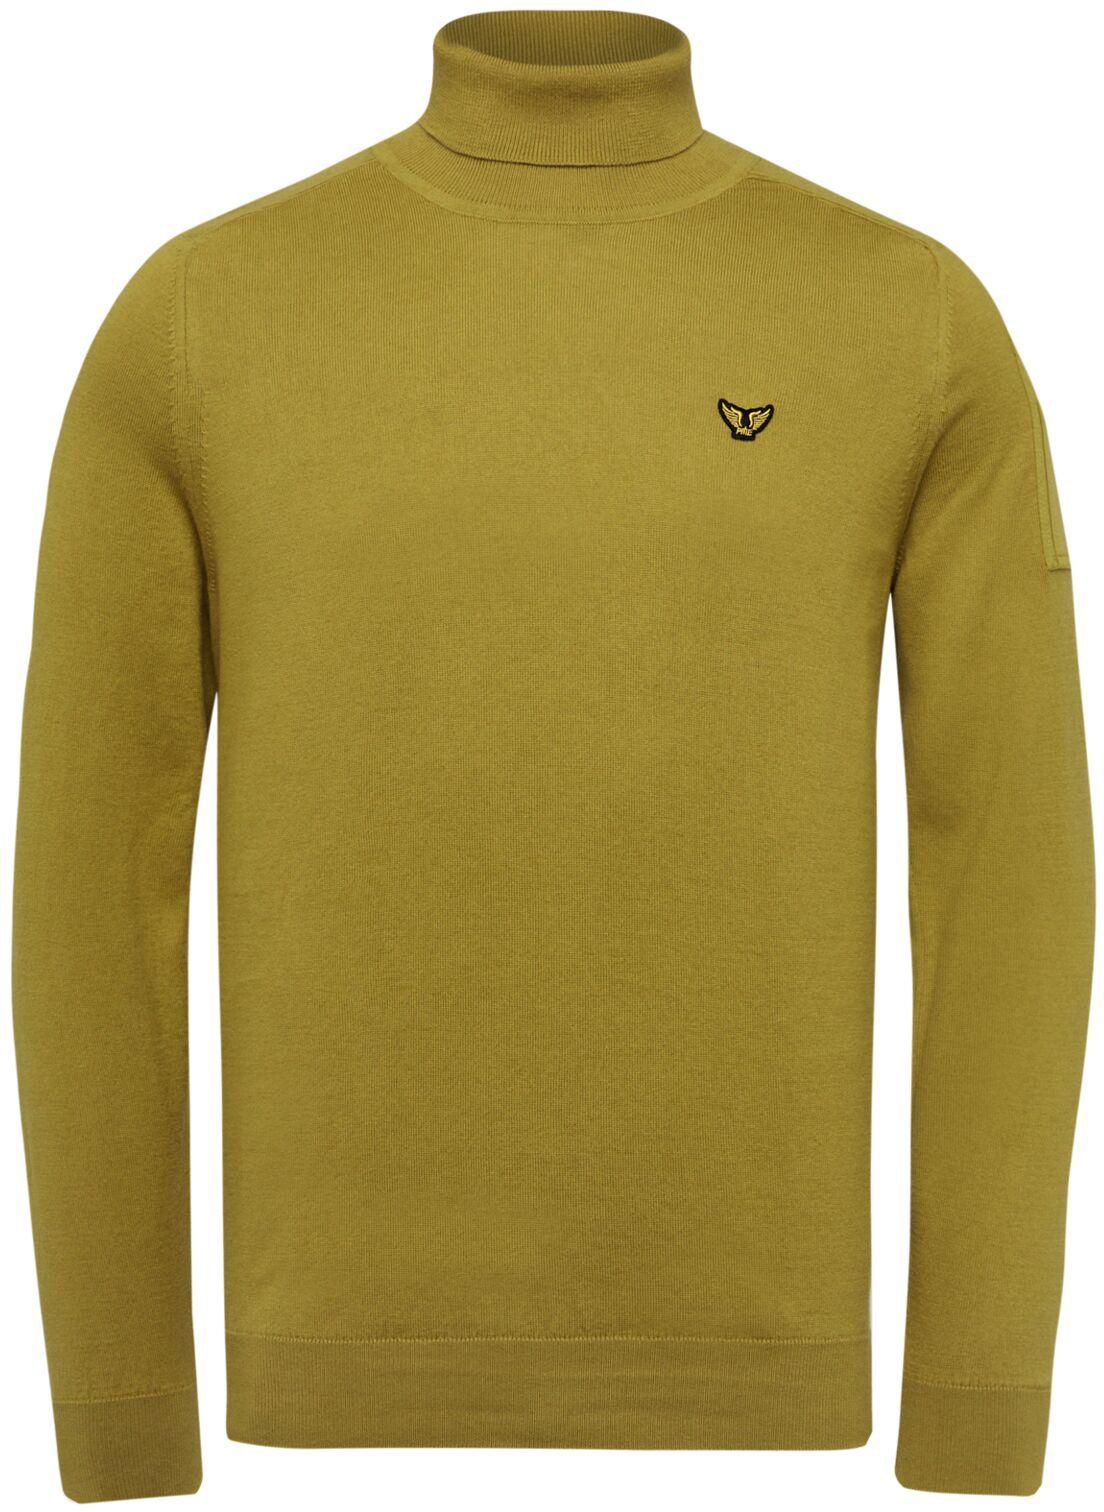 PME Legend Turtleneck Sweater Green size L